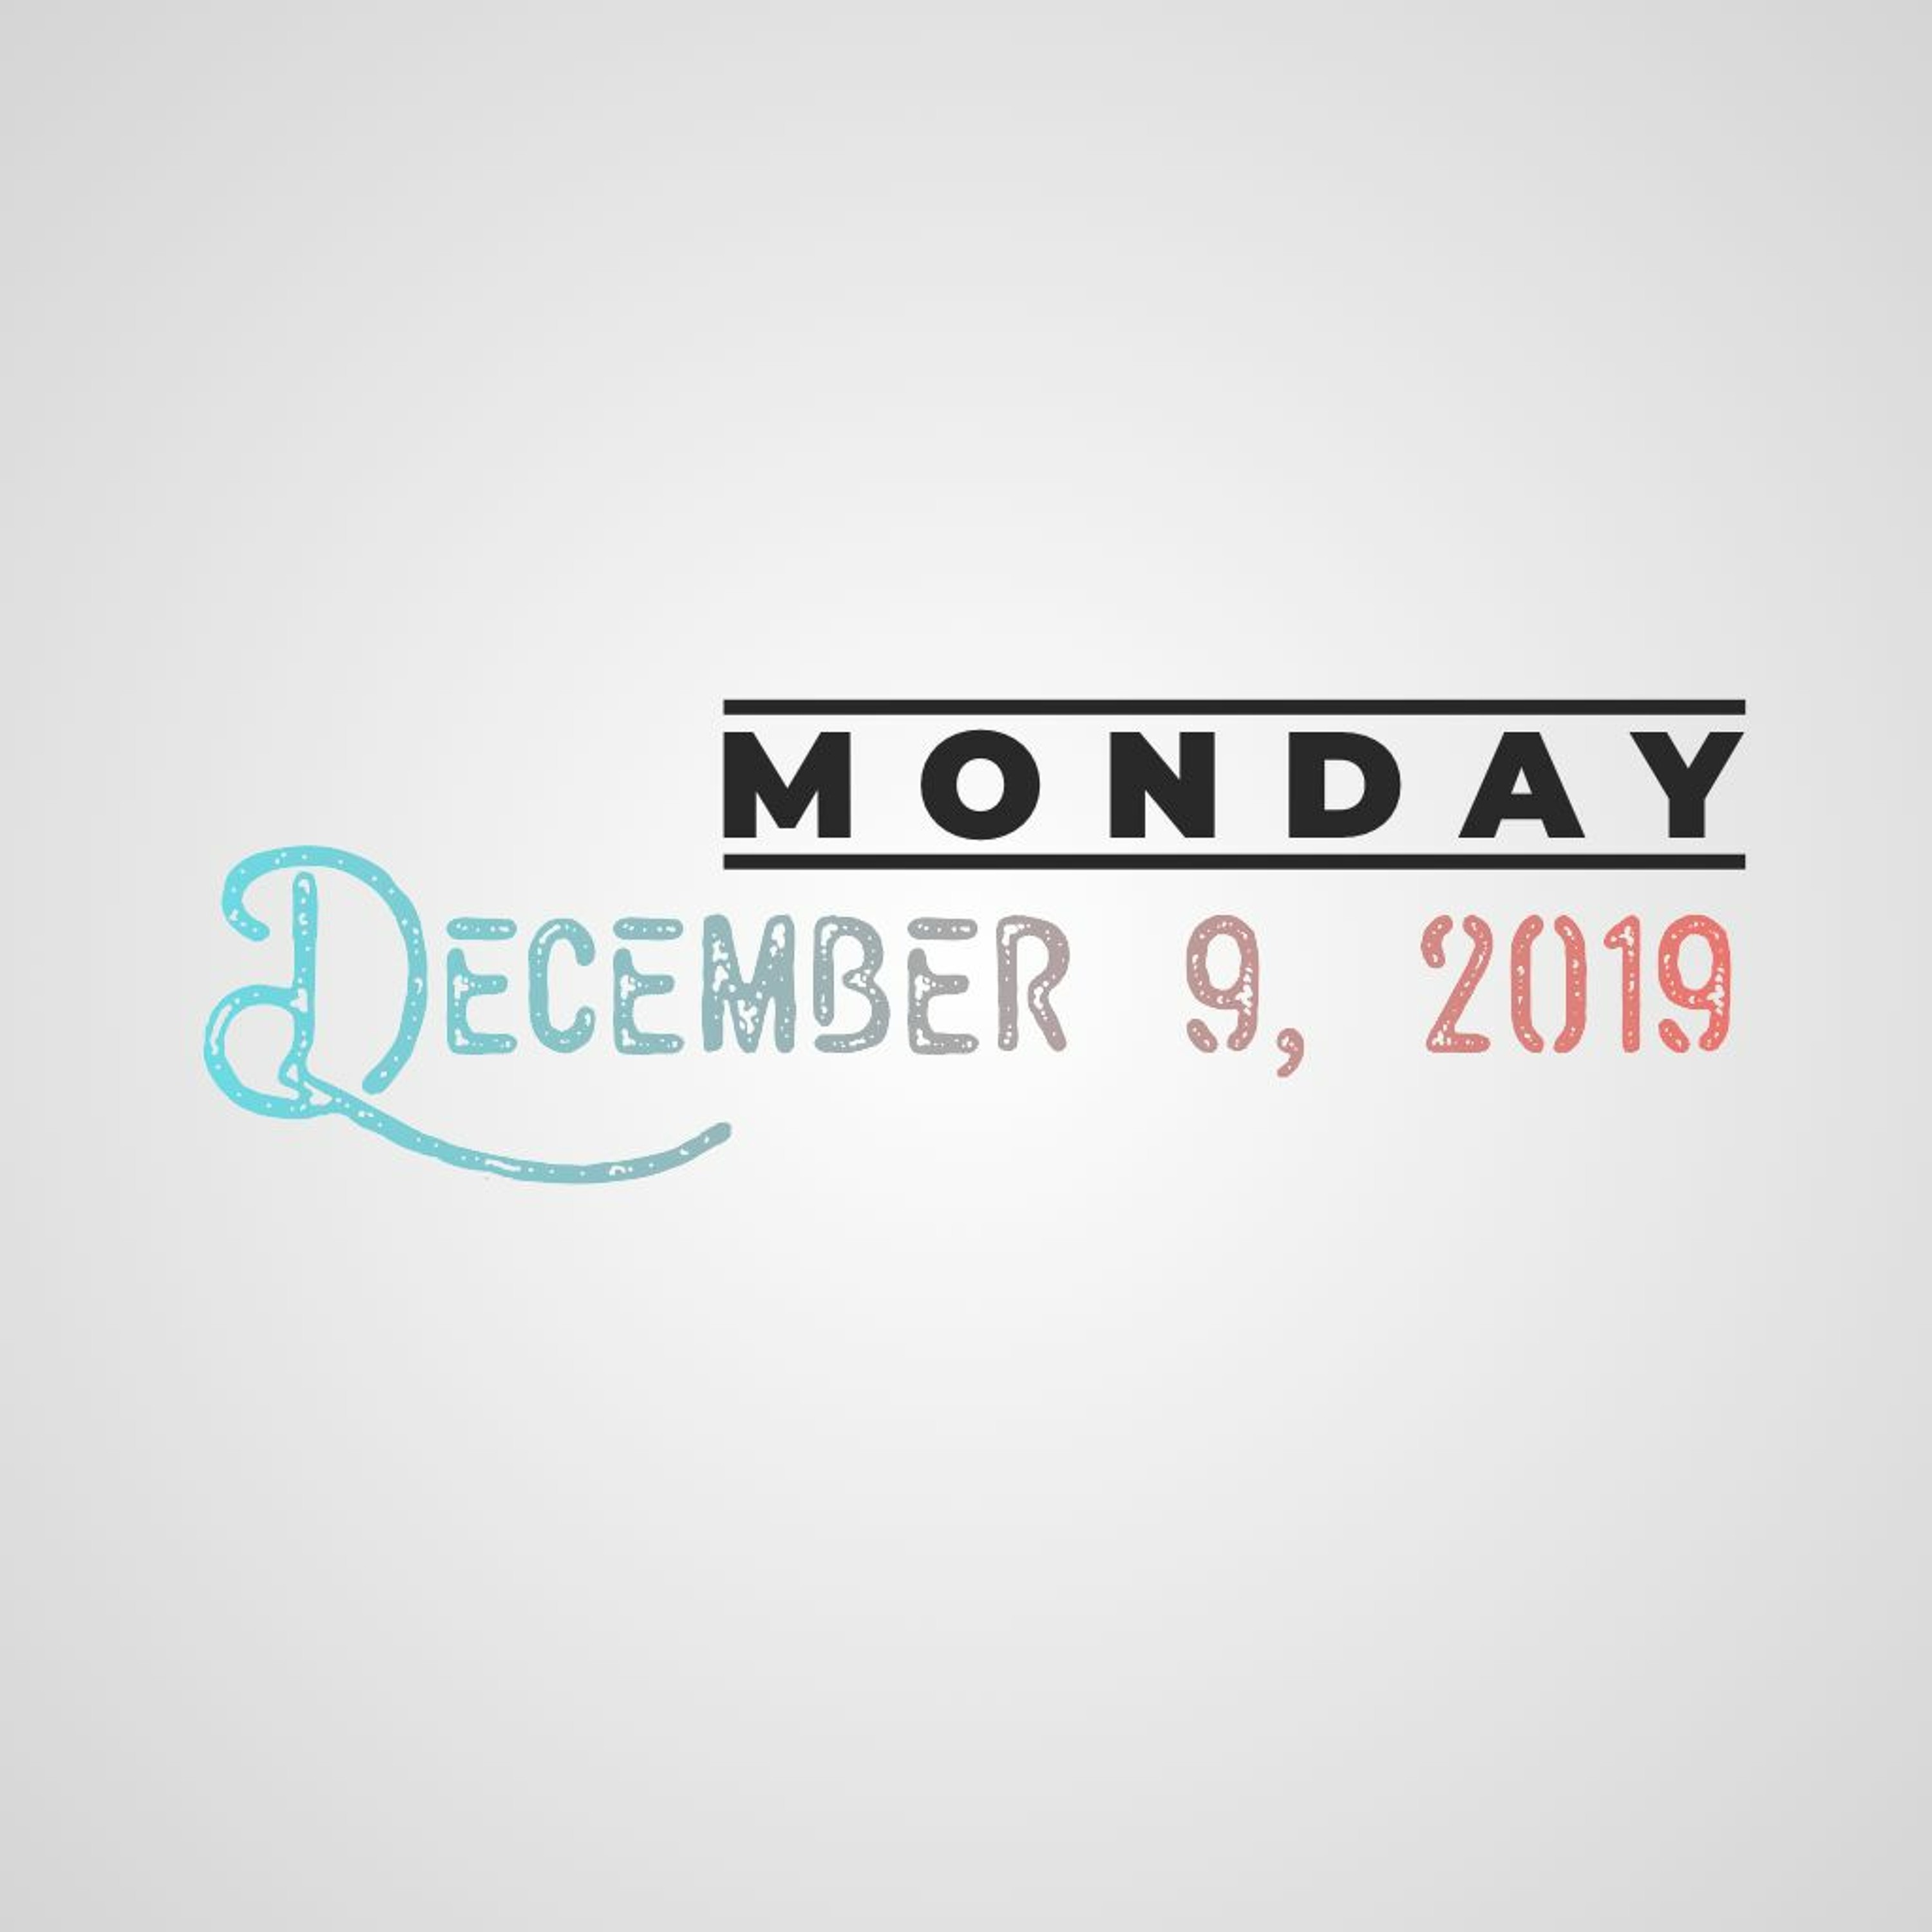 Monday, December 9. 2019